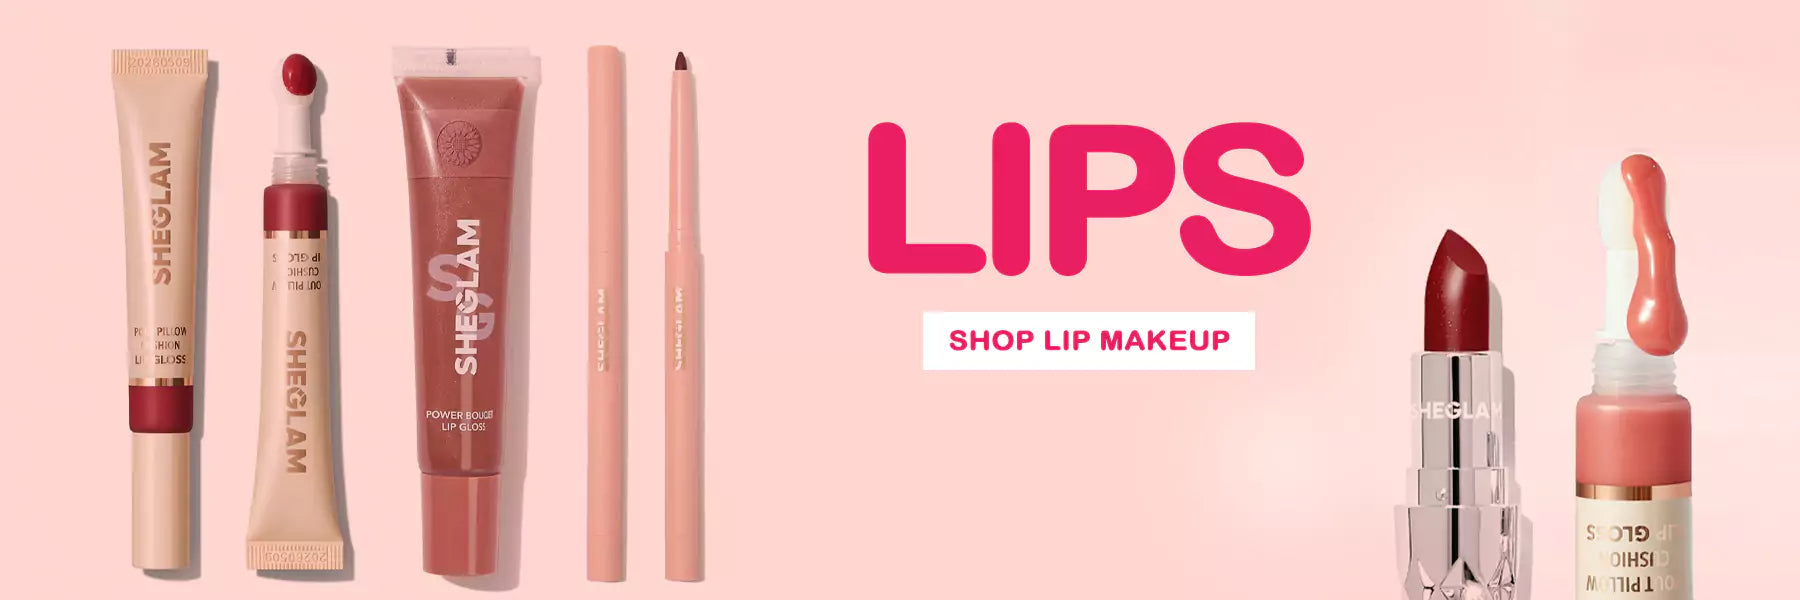 Lips Makeup Banner